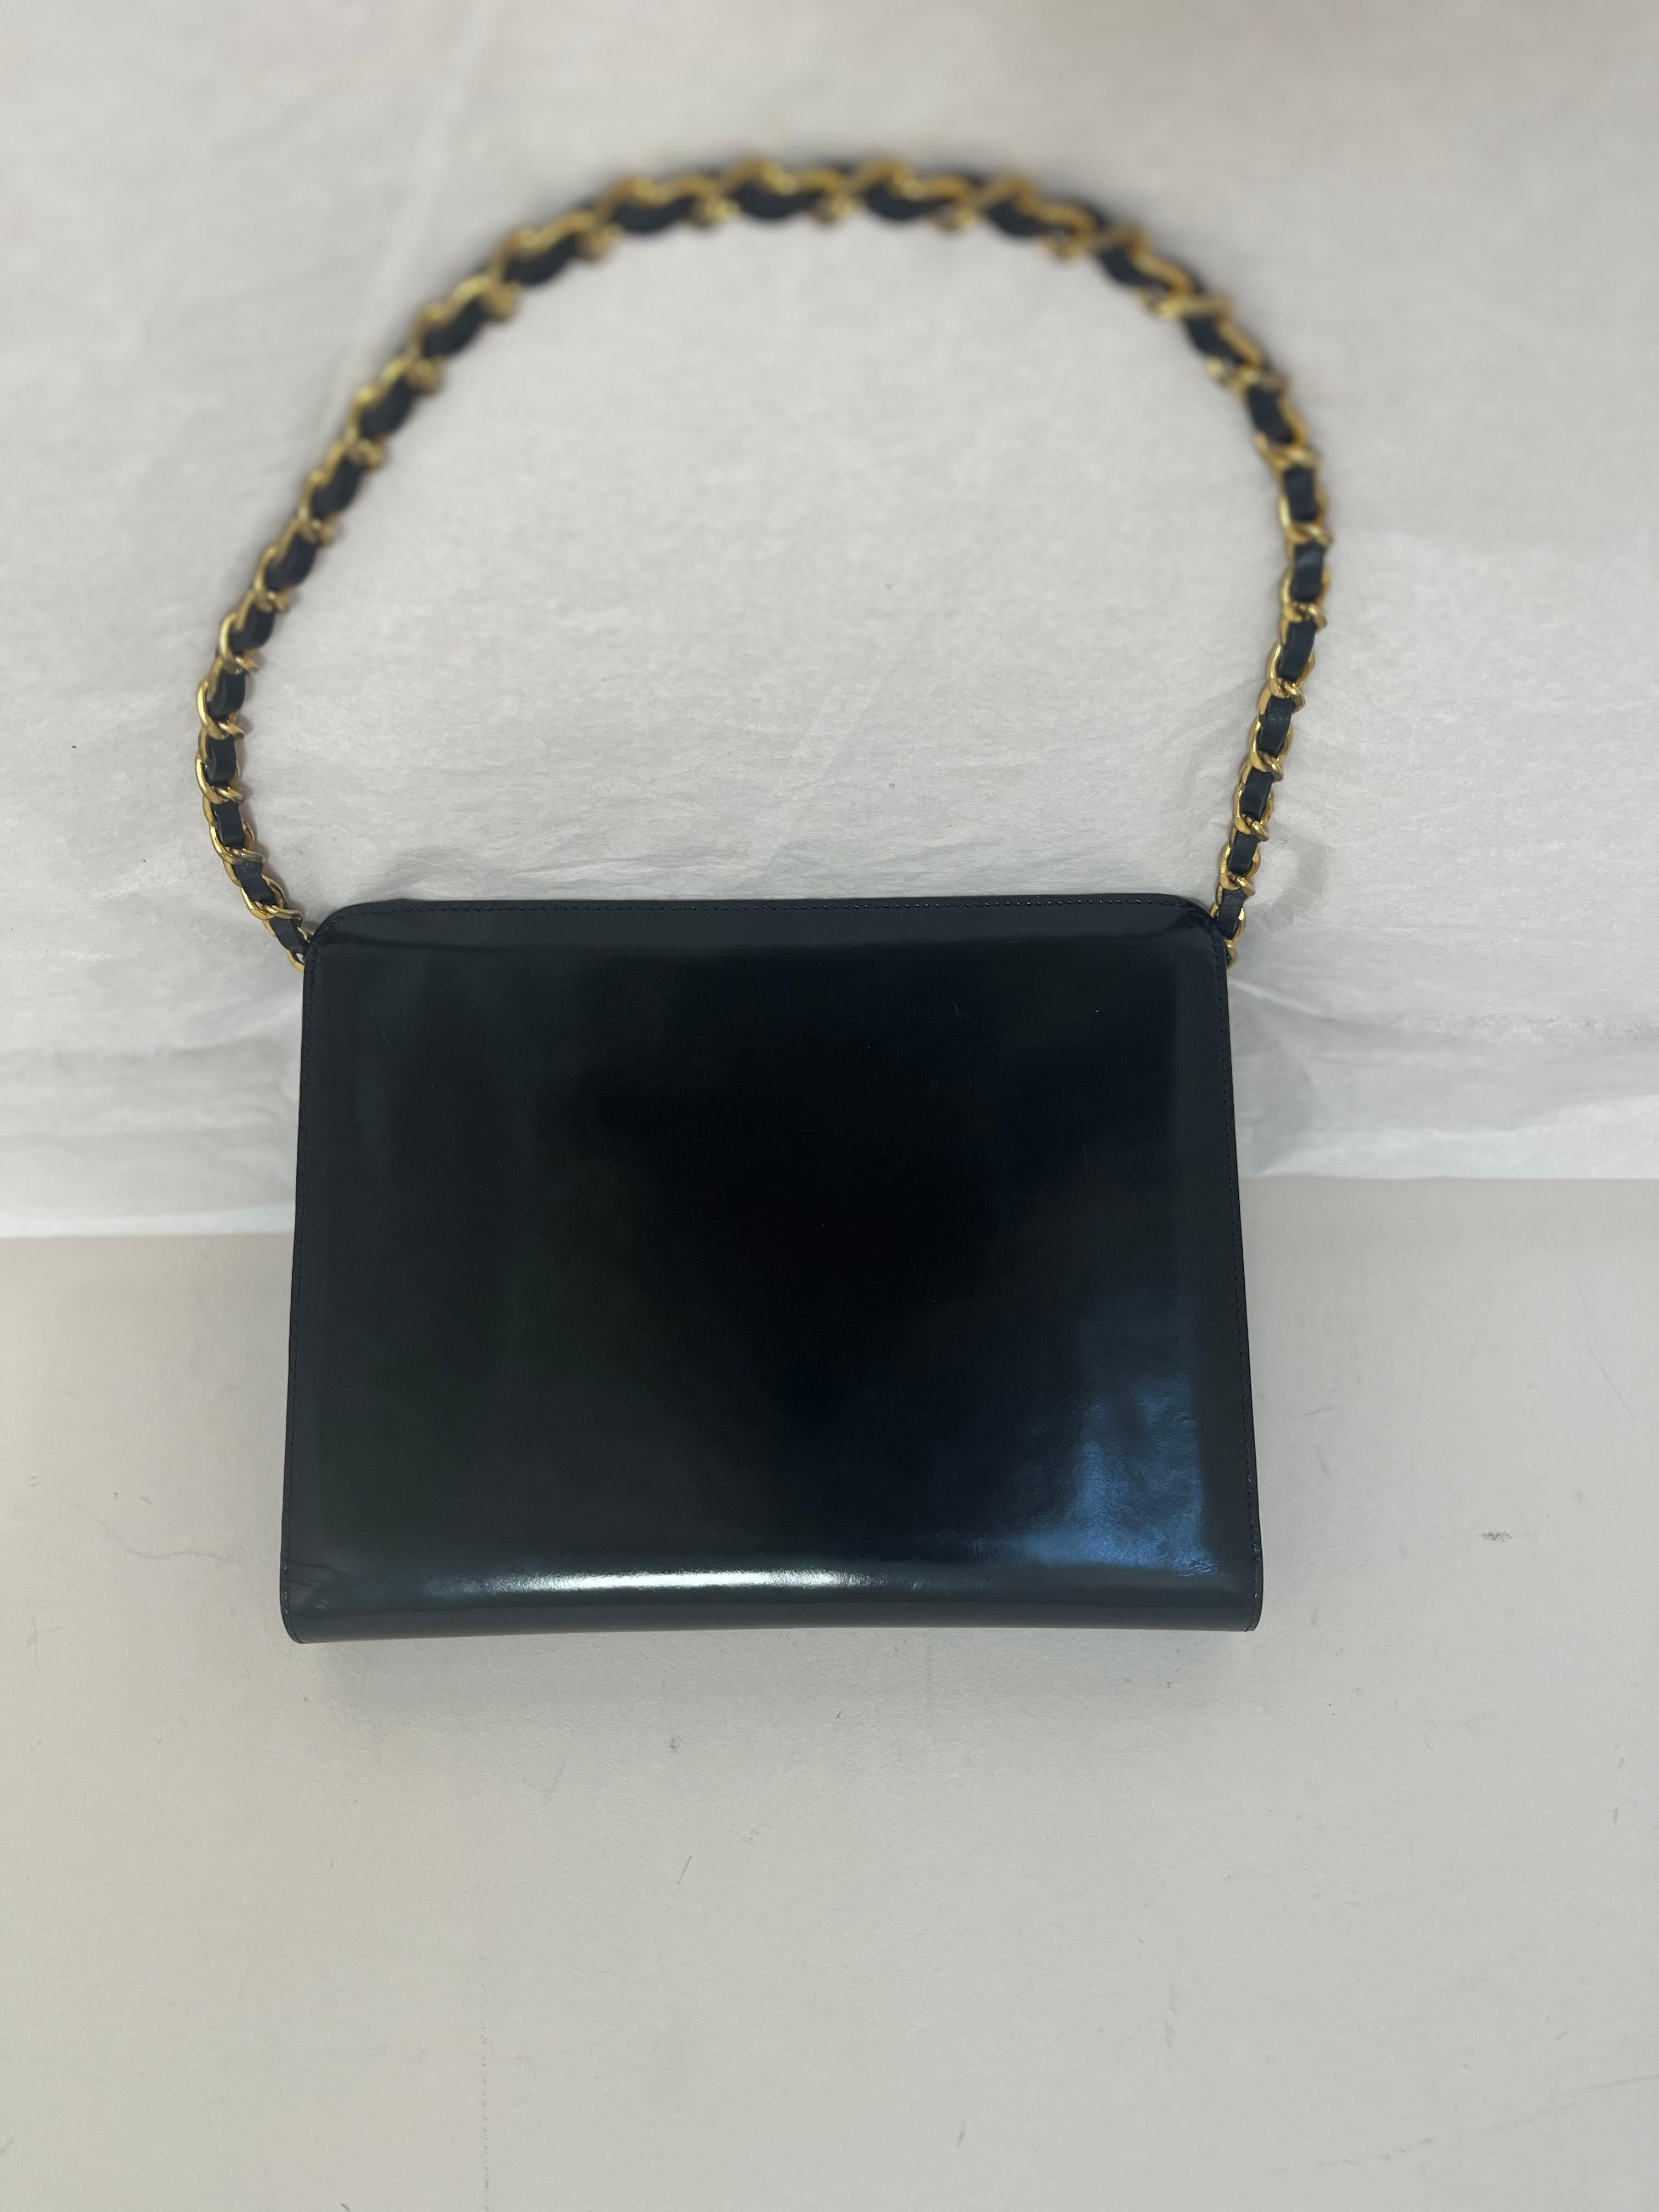 1986-88 Chanel Black Patent Leather Handbag w/COA and Card 1